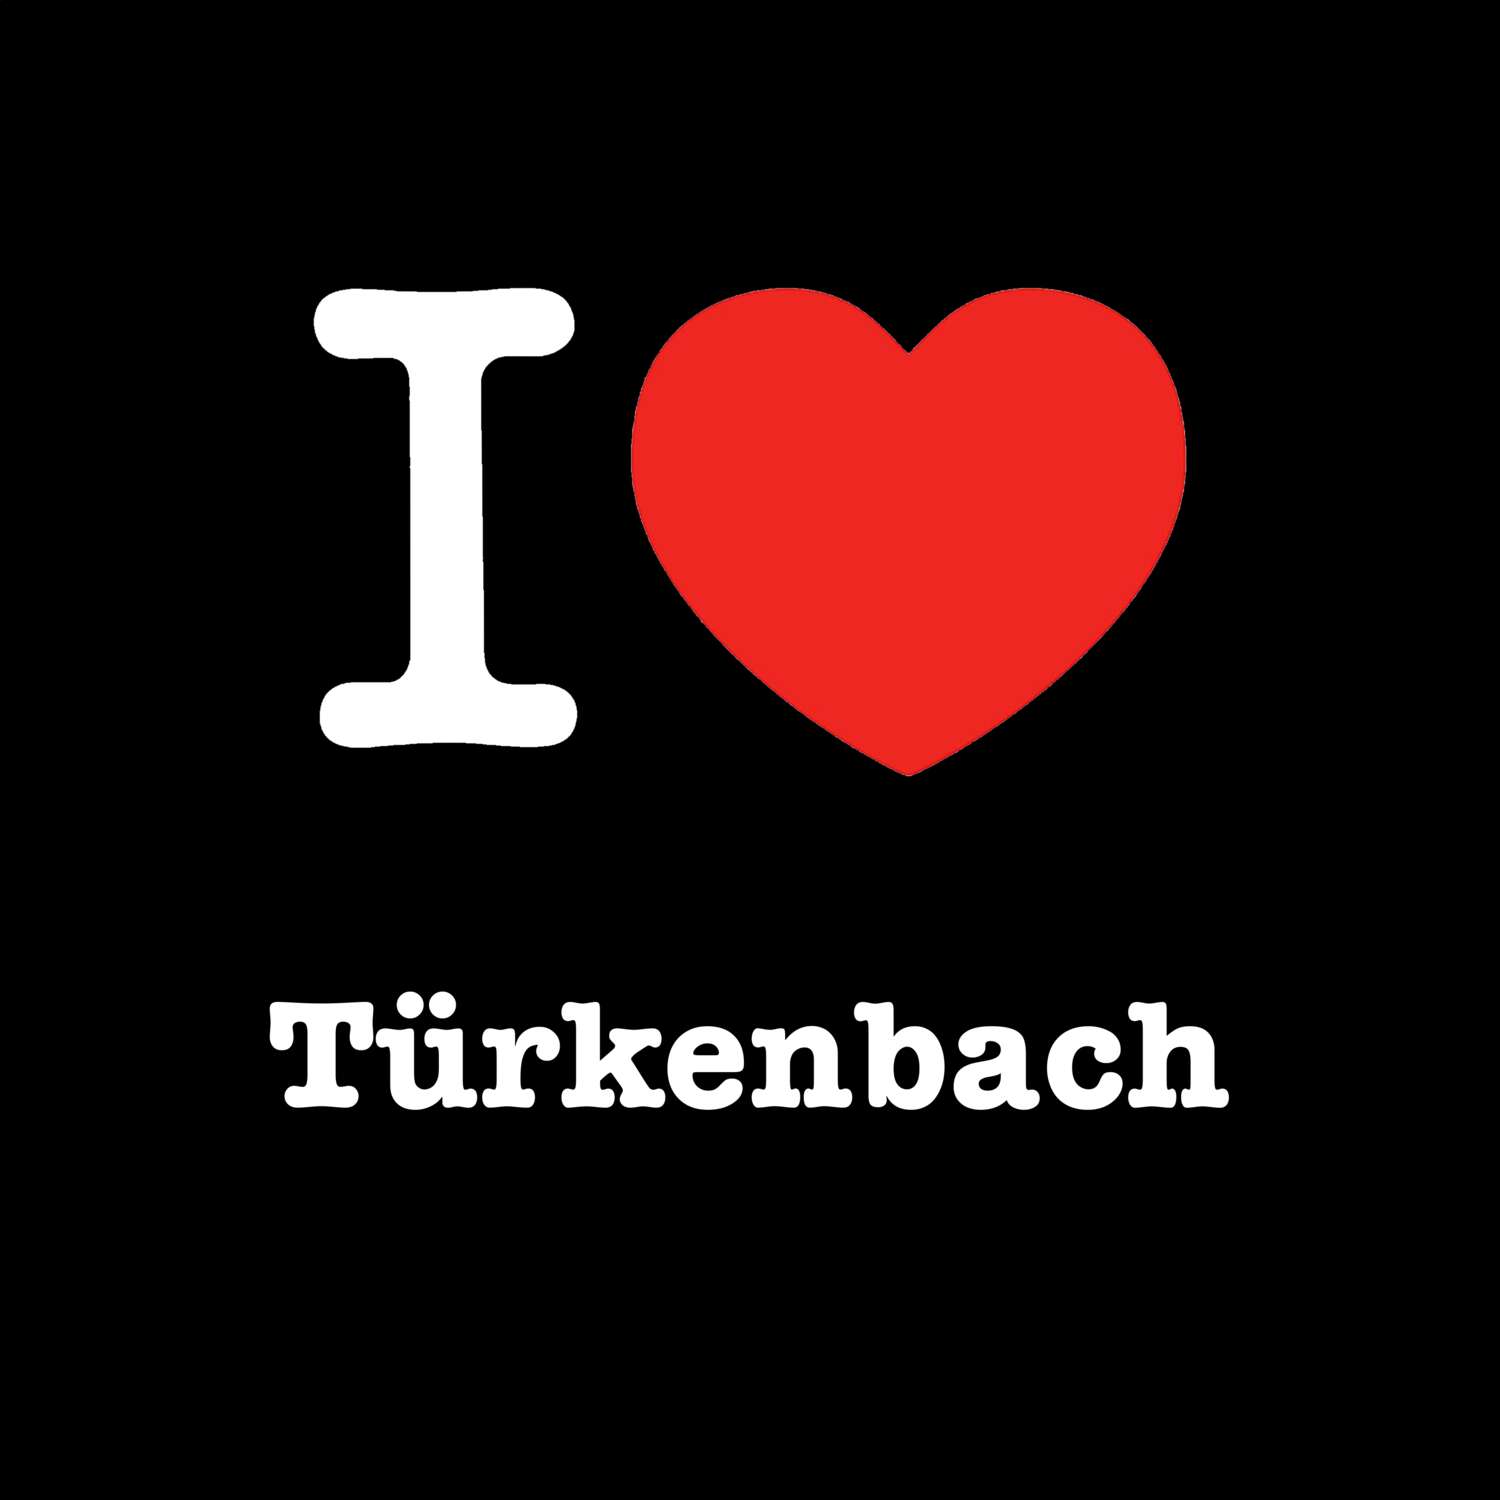 Türkenbach T-Shirt »I love«